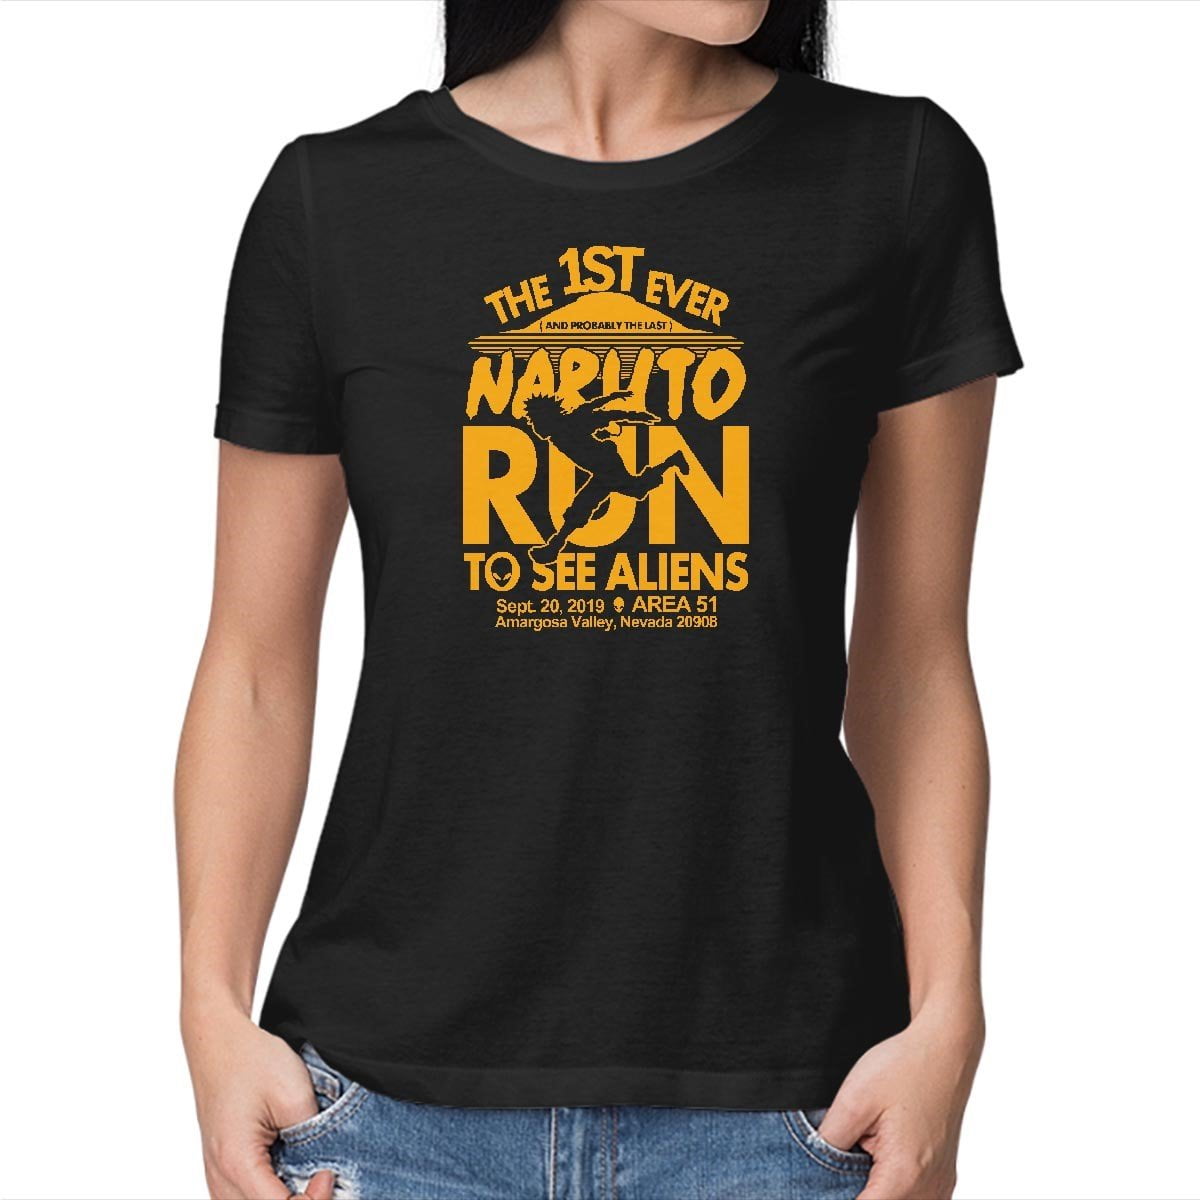 TeeFury Women’s Graphic T shirt Naruto Run for Aliens   Funny   Video Game    Black   XL